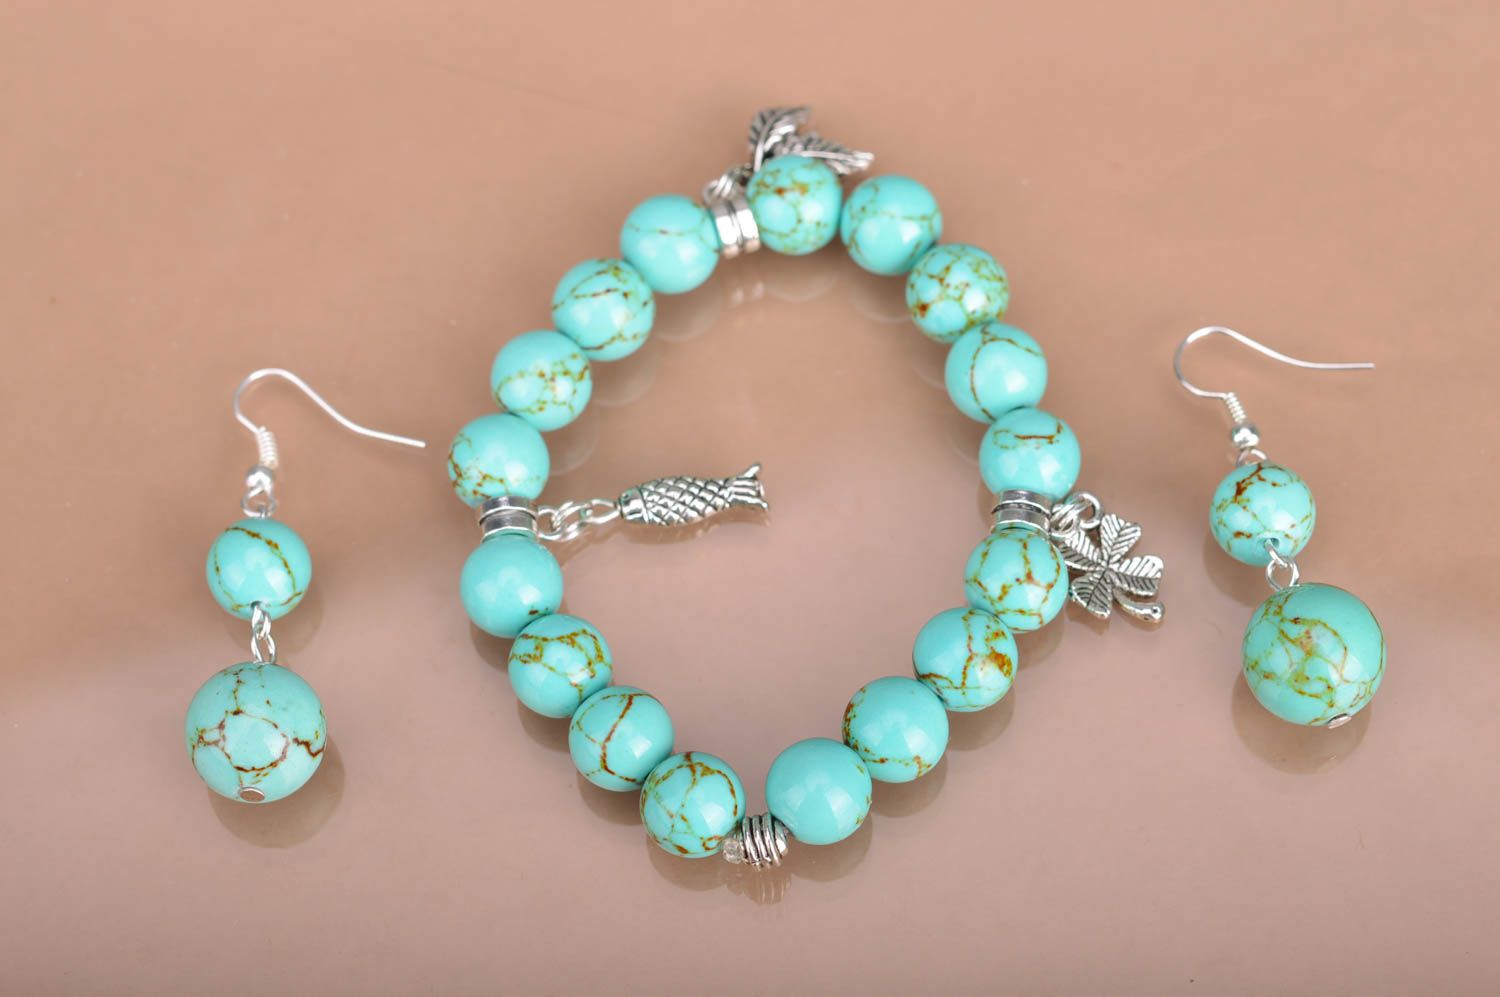 Handmade turquoise beaded jewelry set wrist bracelet with charms and earrings photo 2